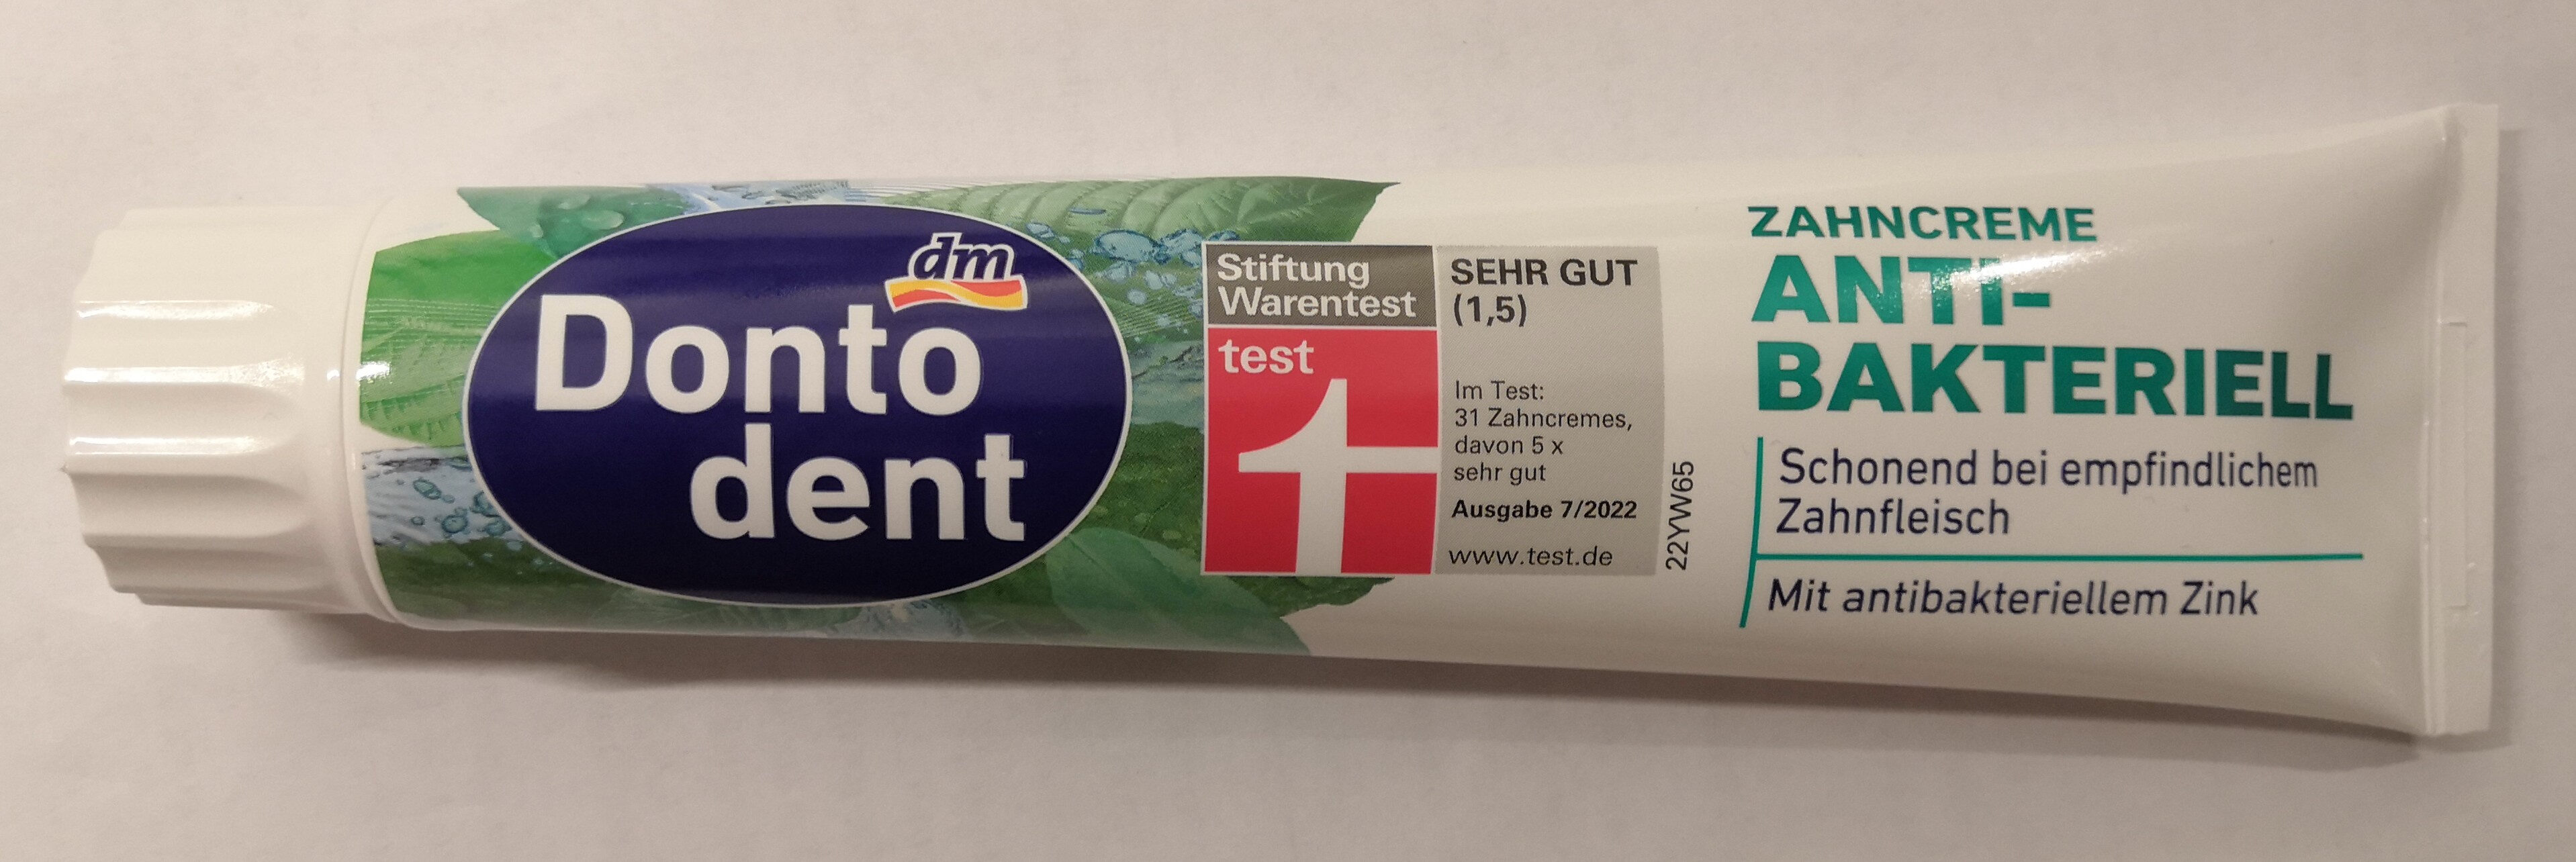 Dontodent Zahncreme Antibakteriell - Product - de